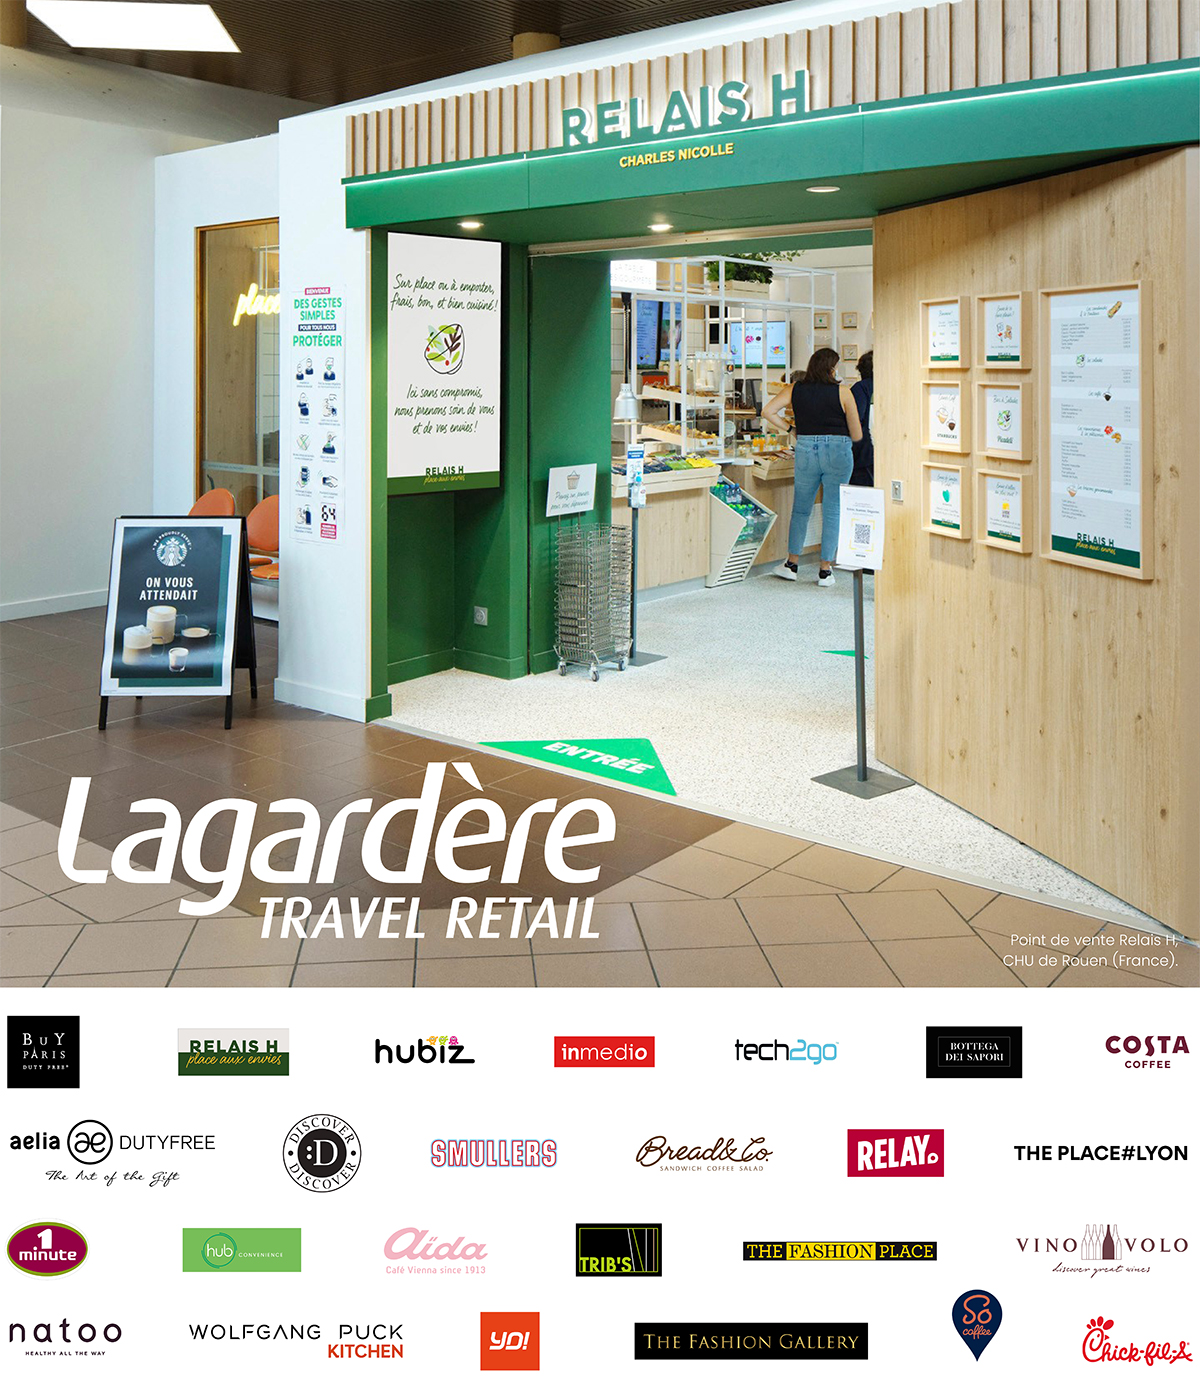 Lagardère Travel Retail - Point de vente Ralais H